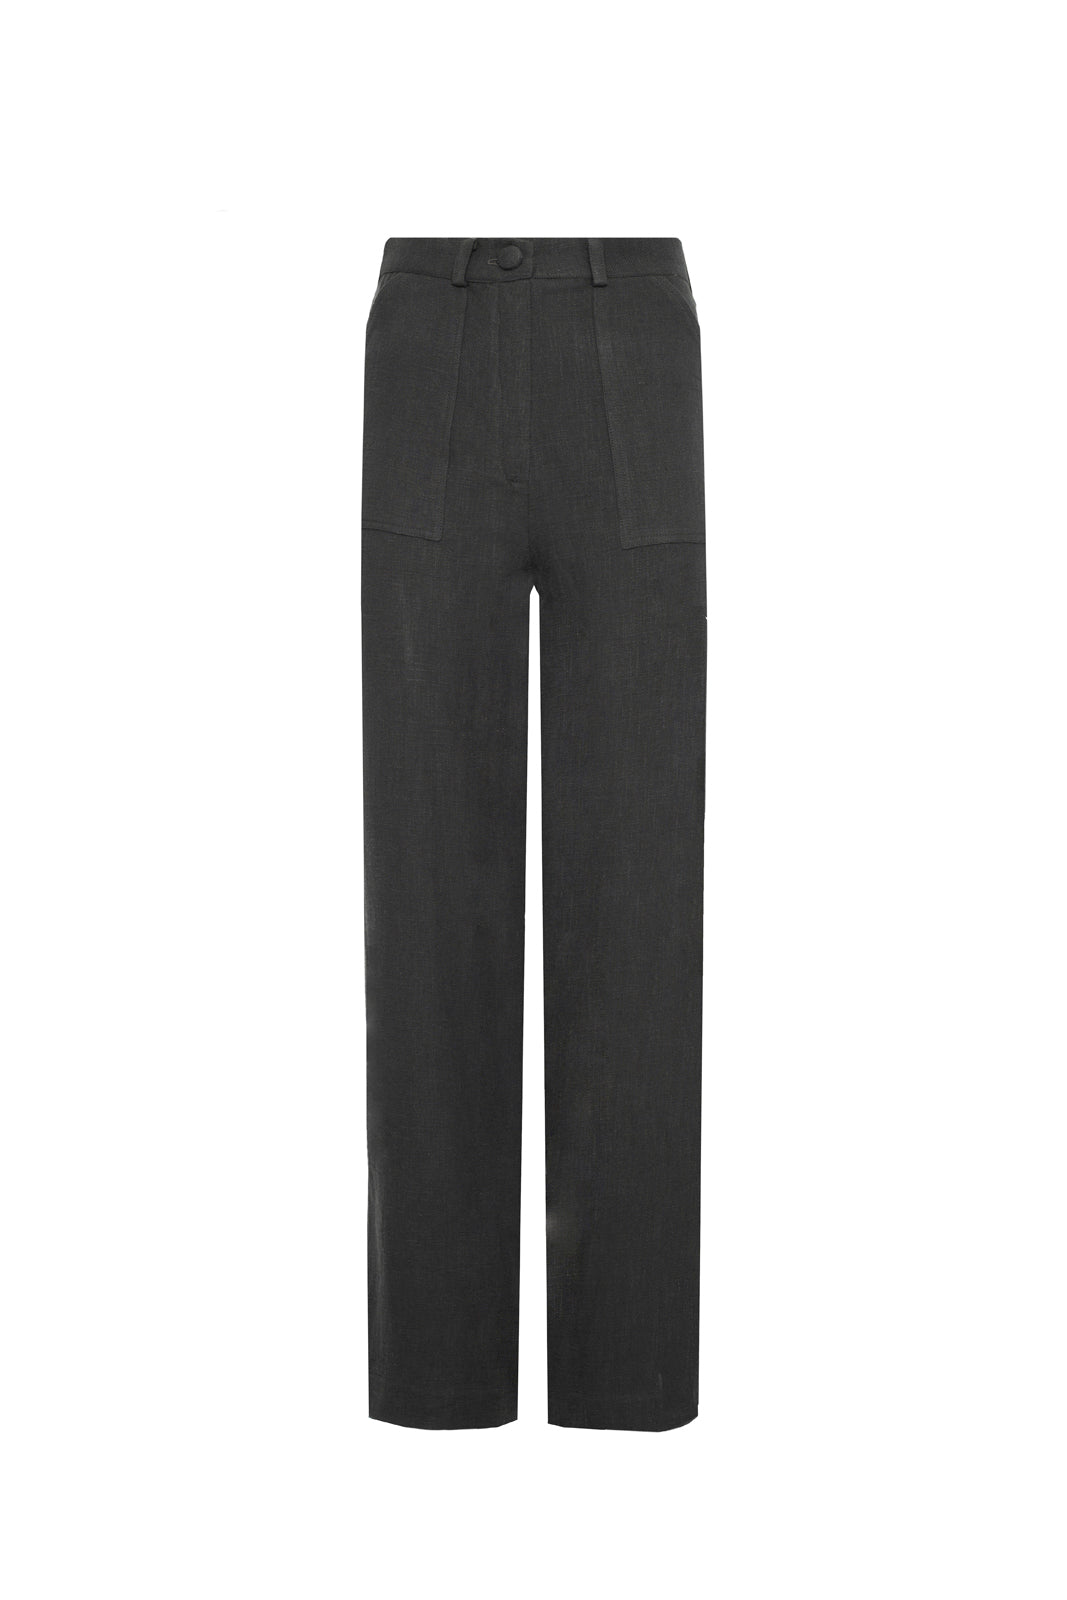 NOA trousers - ramie, graphite